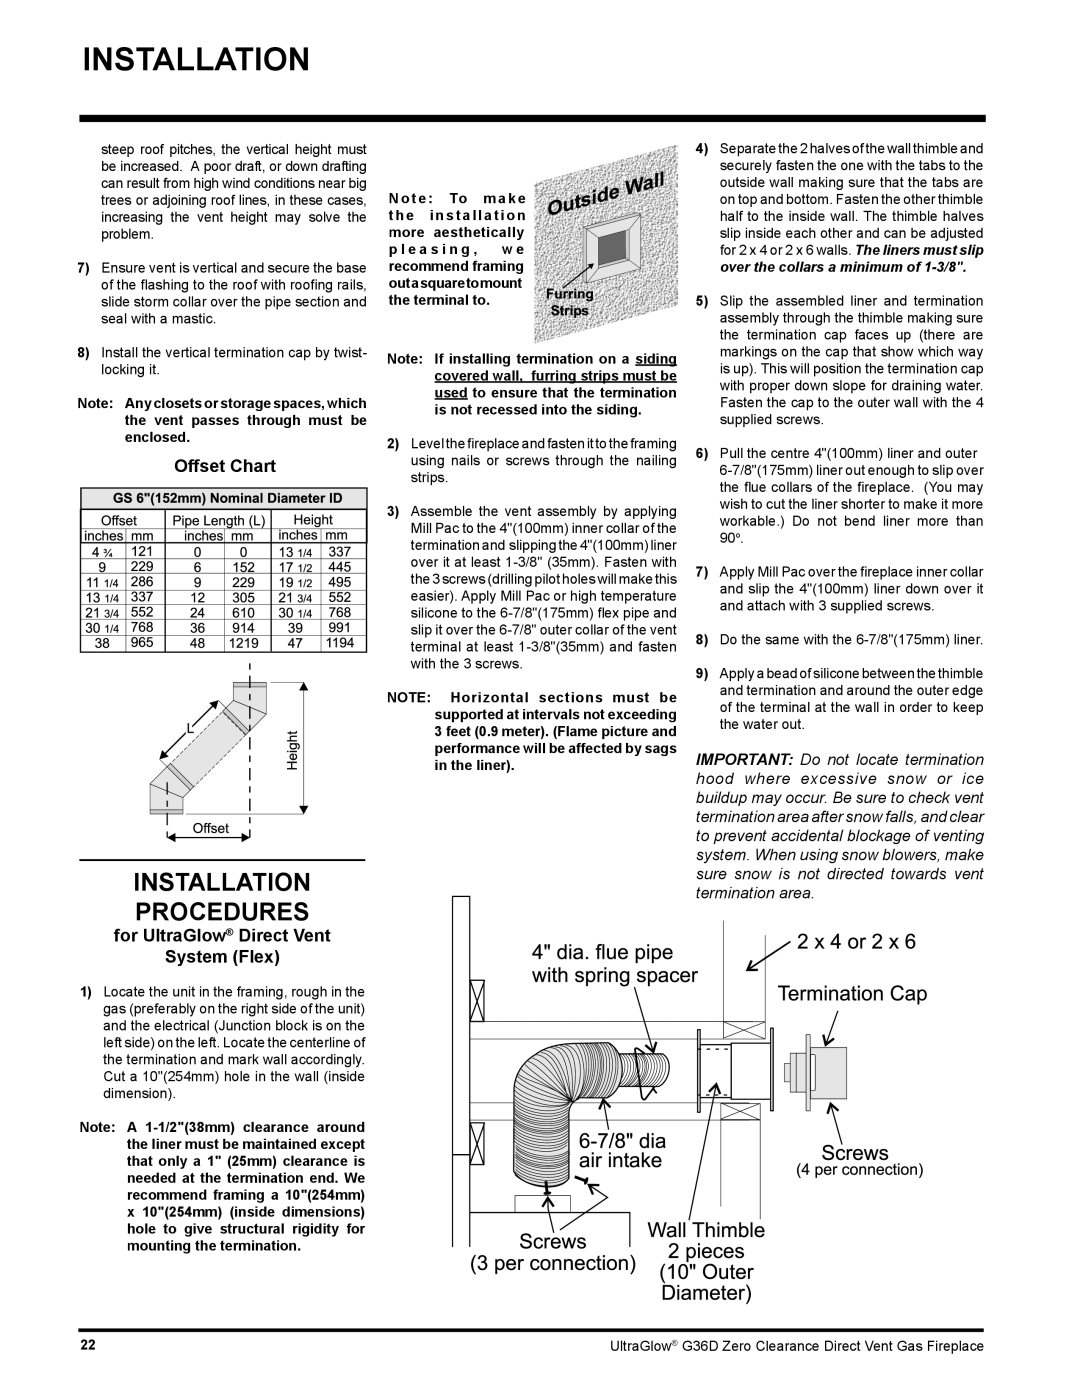 Regency G36D installation manual Installation Procedures, Offset Chart, for UltraGlow Direct Vent System Flex 